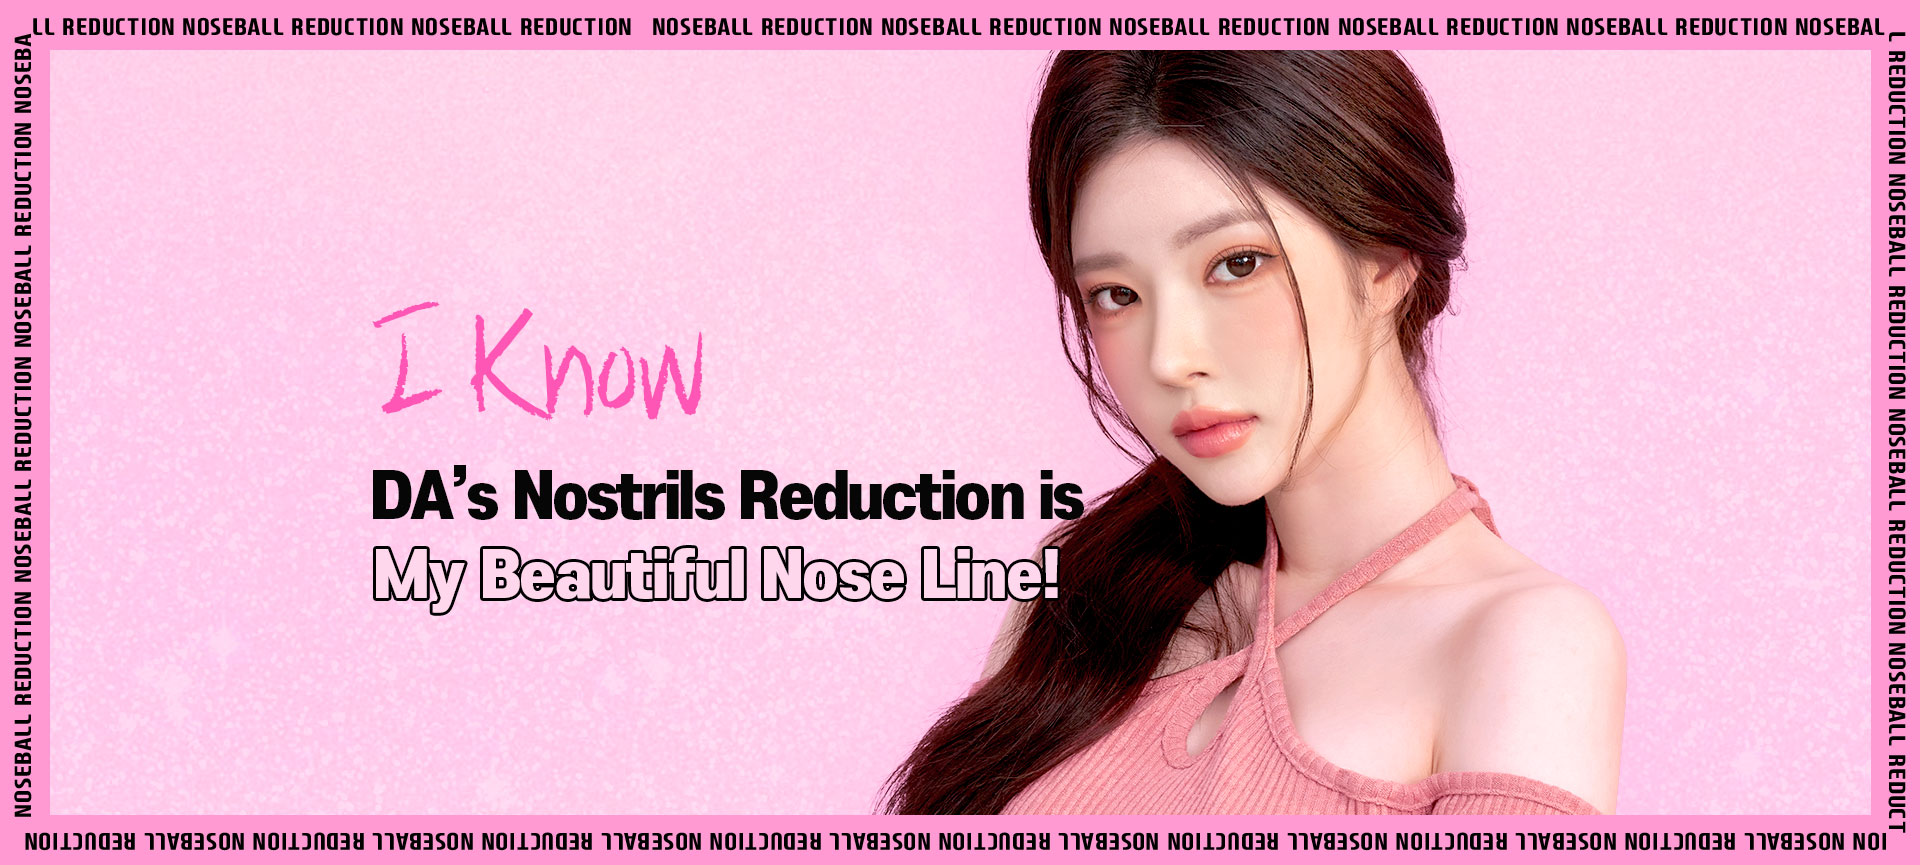 DA Nostril reduction